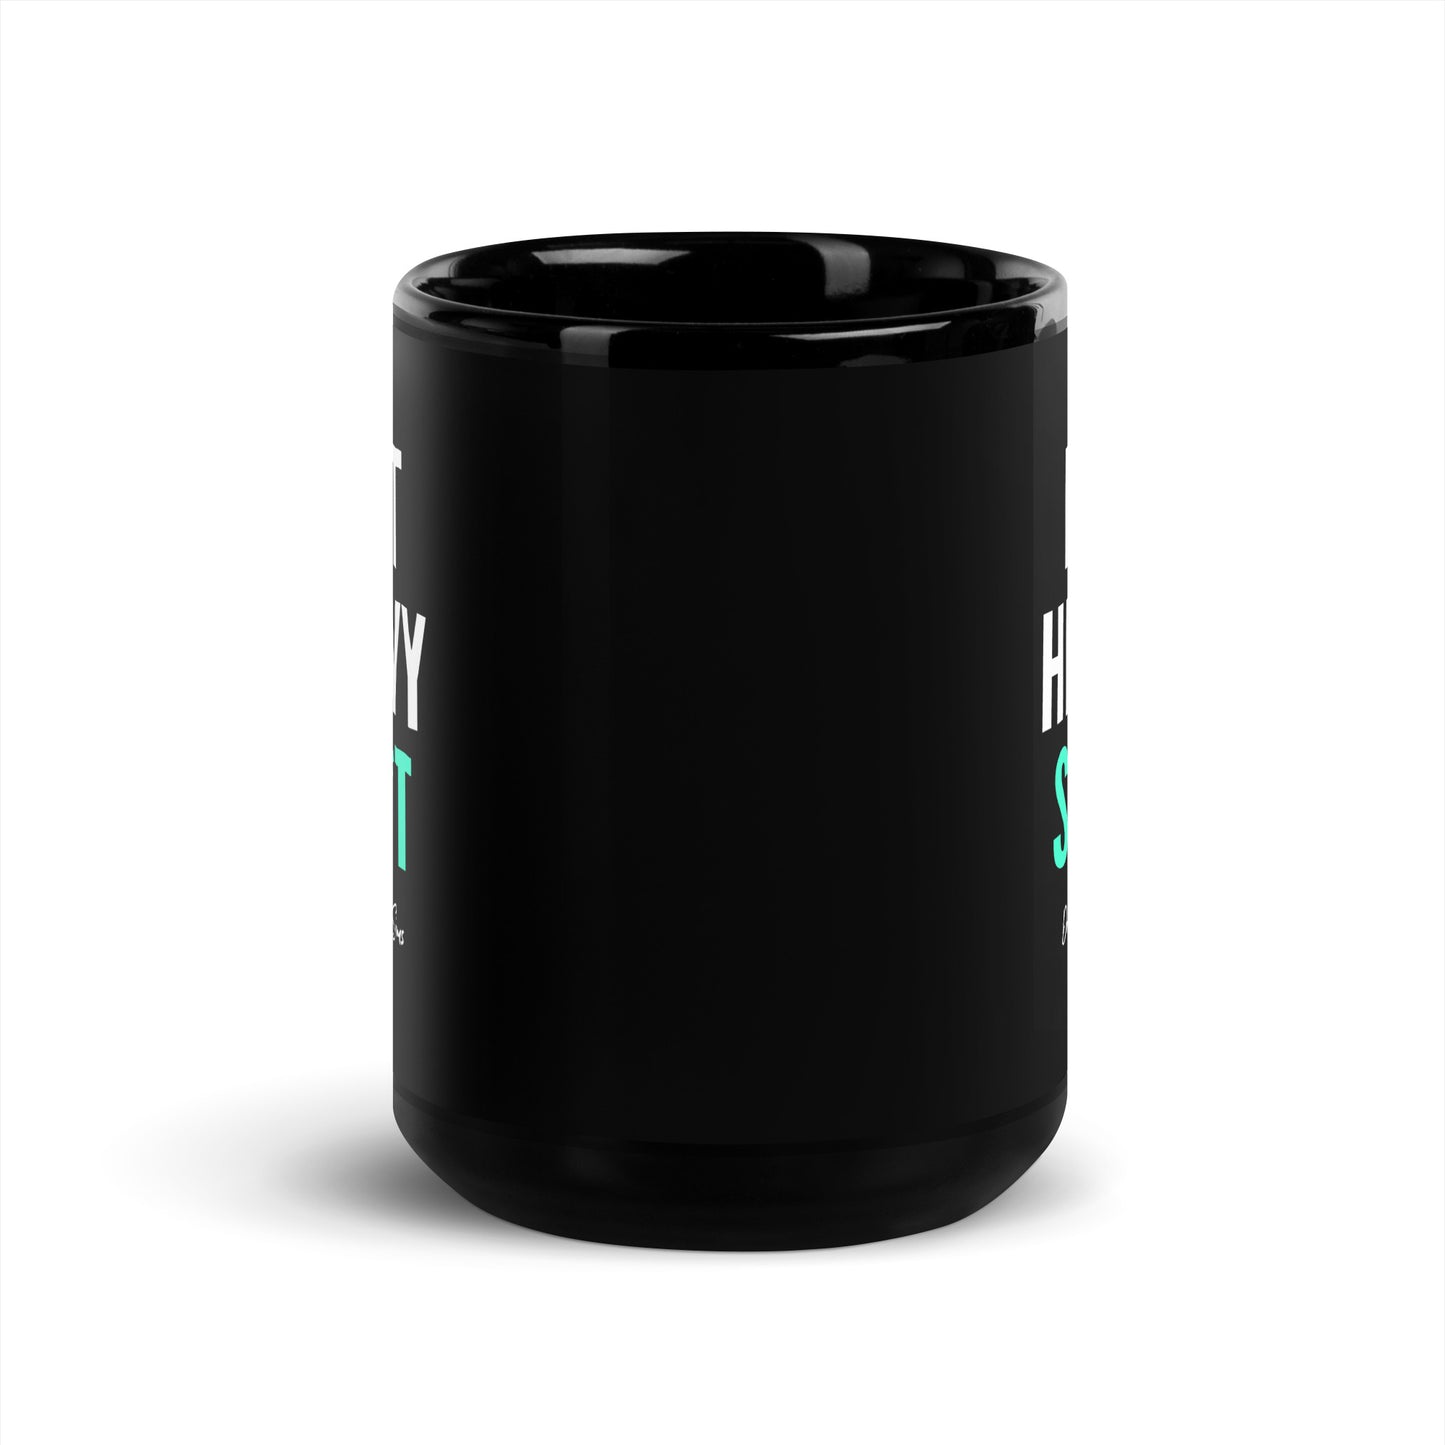 LHS Black Glossy Mug - Teal, two sizes (USA only)